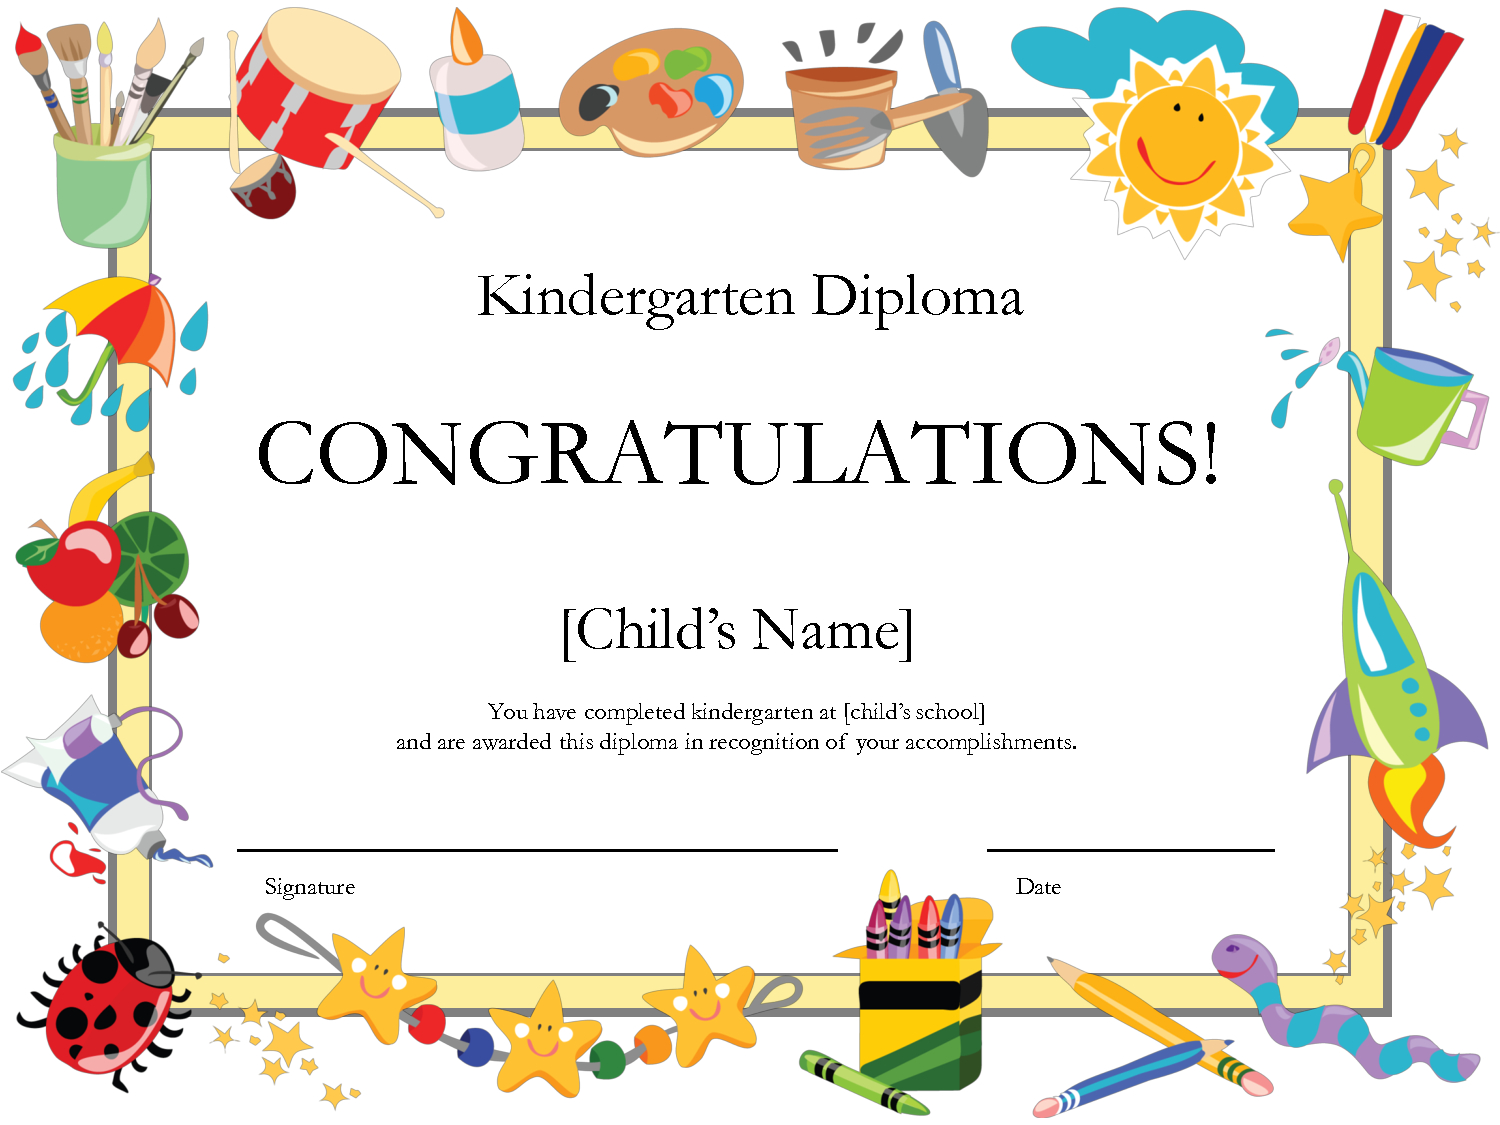 Free Printable Kindergarten Diplomaprintshowergames Megipu regarding Free School Certificate Templates